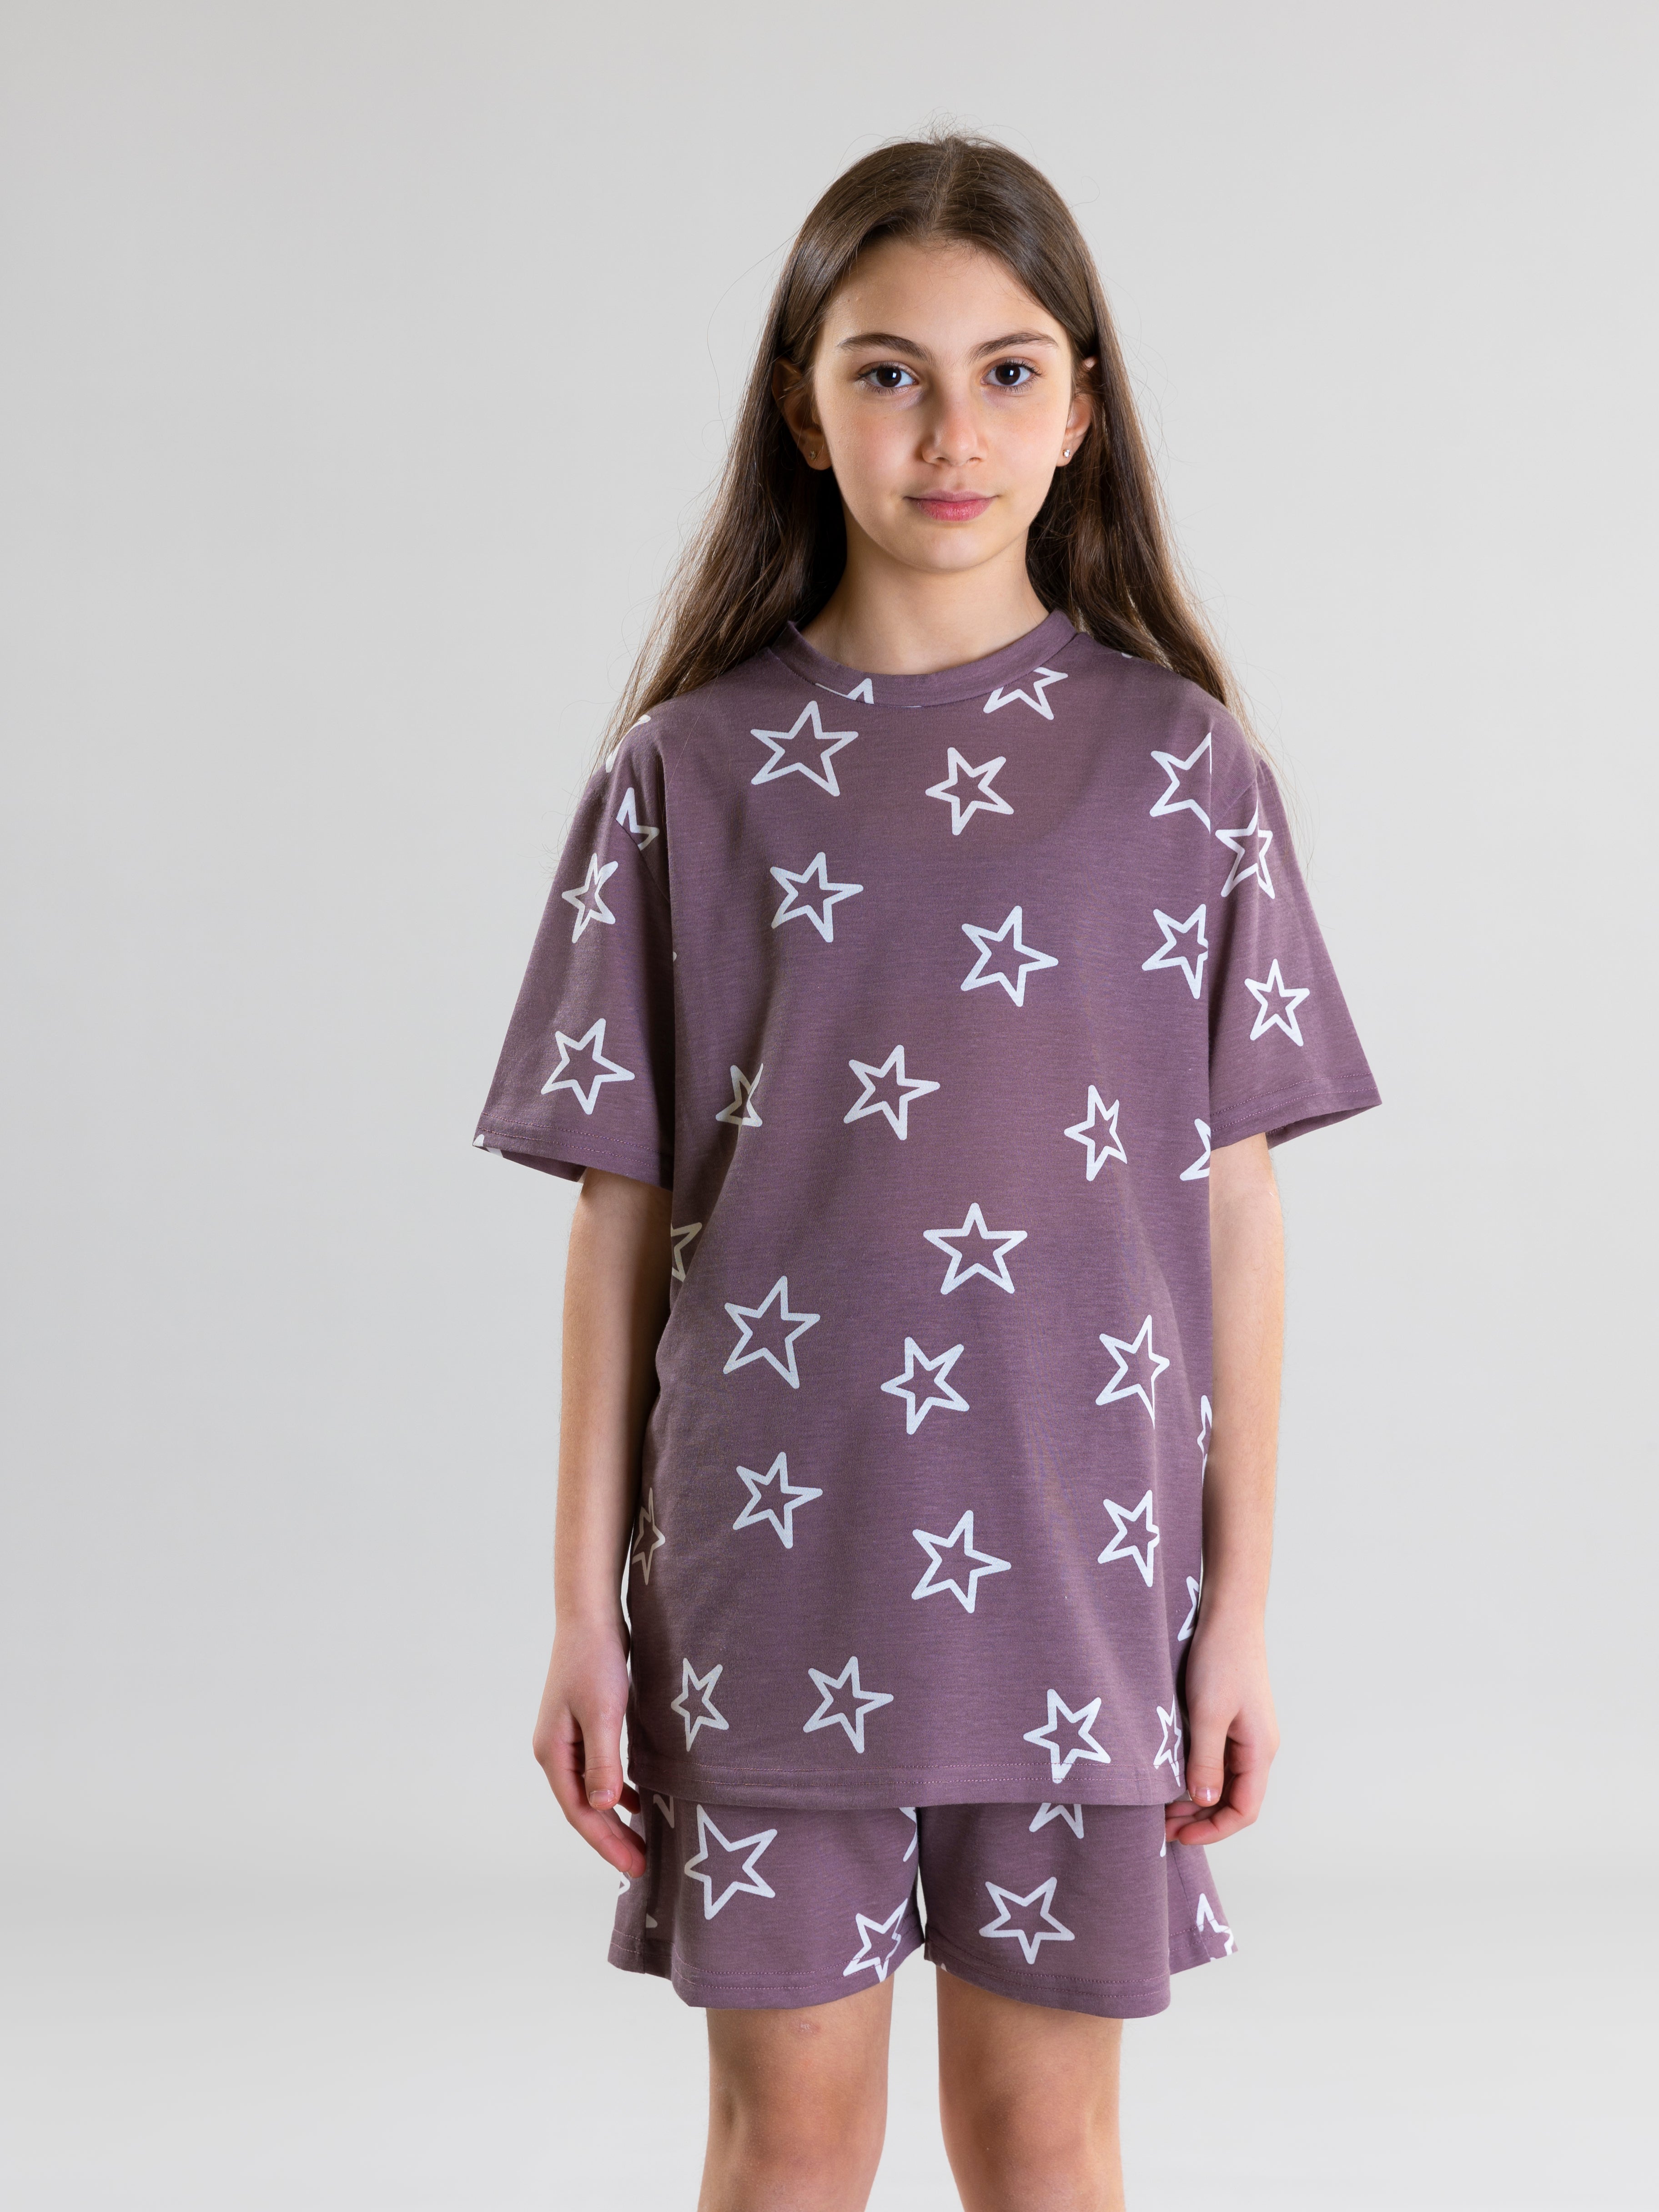 Star Design Pyjama Set For Girls - Rosewood